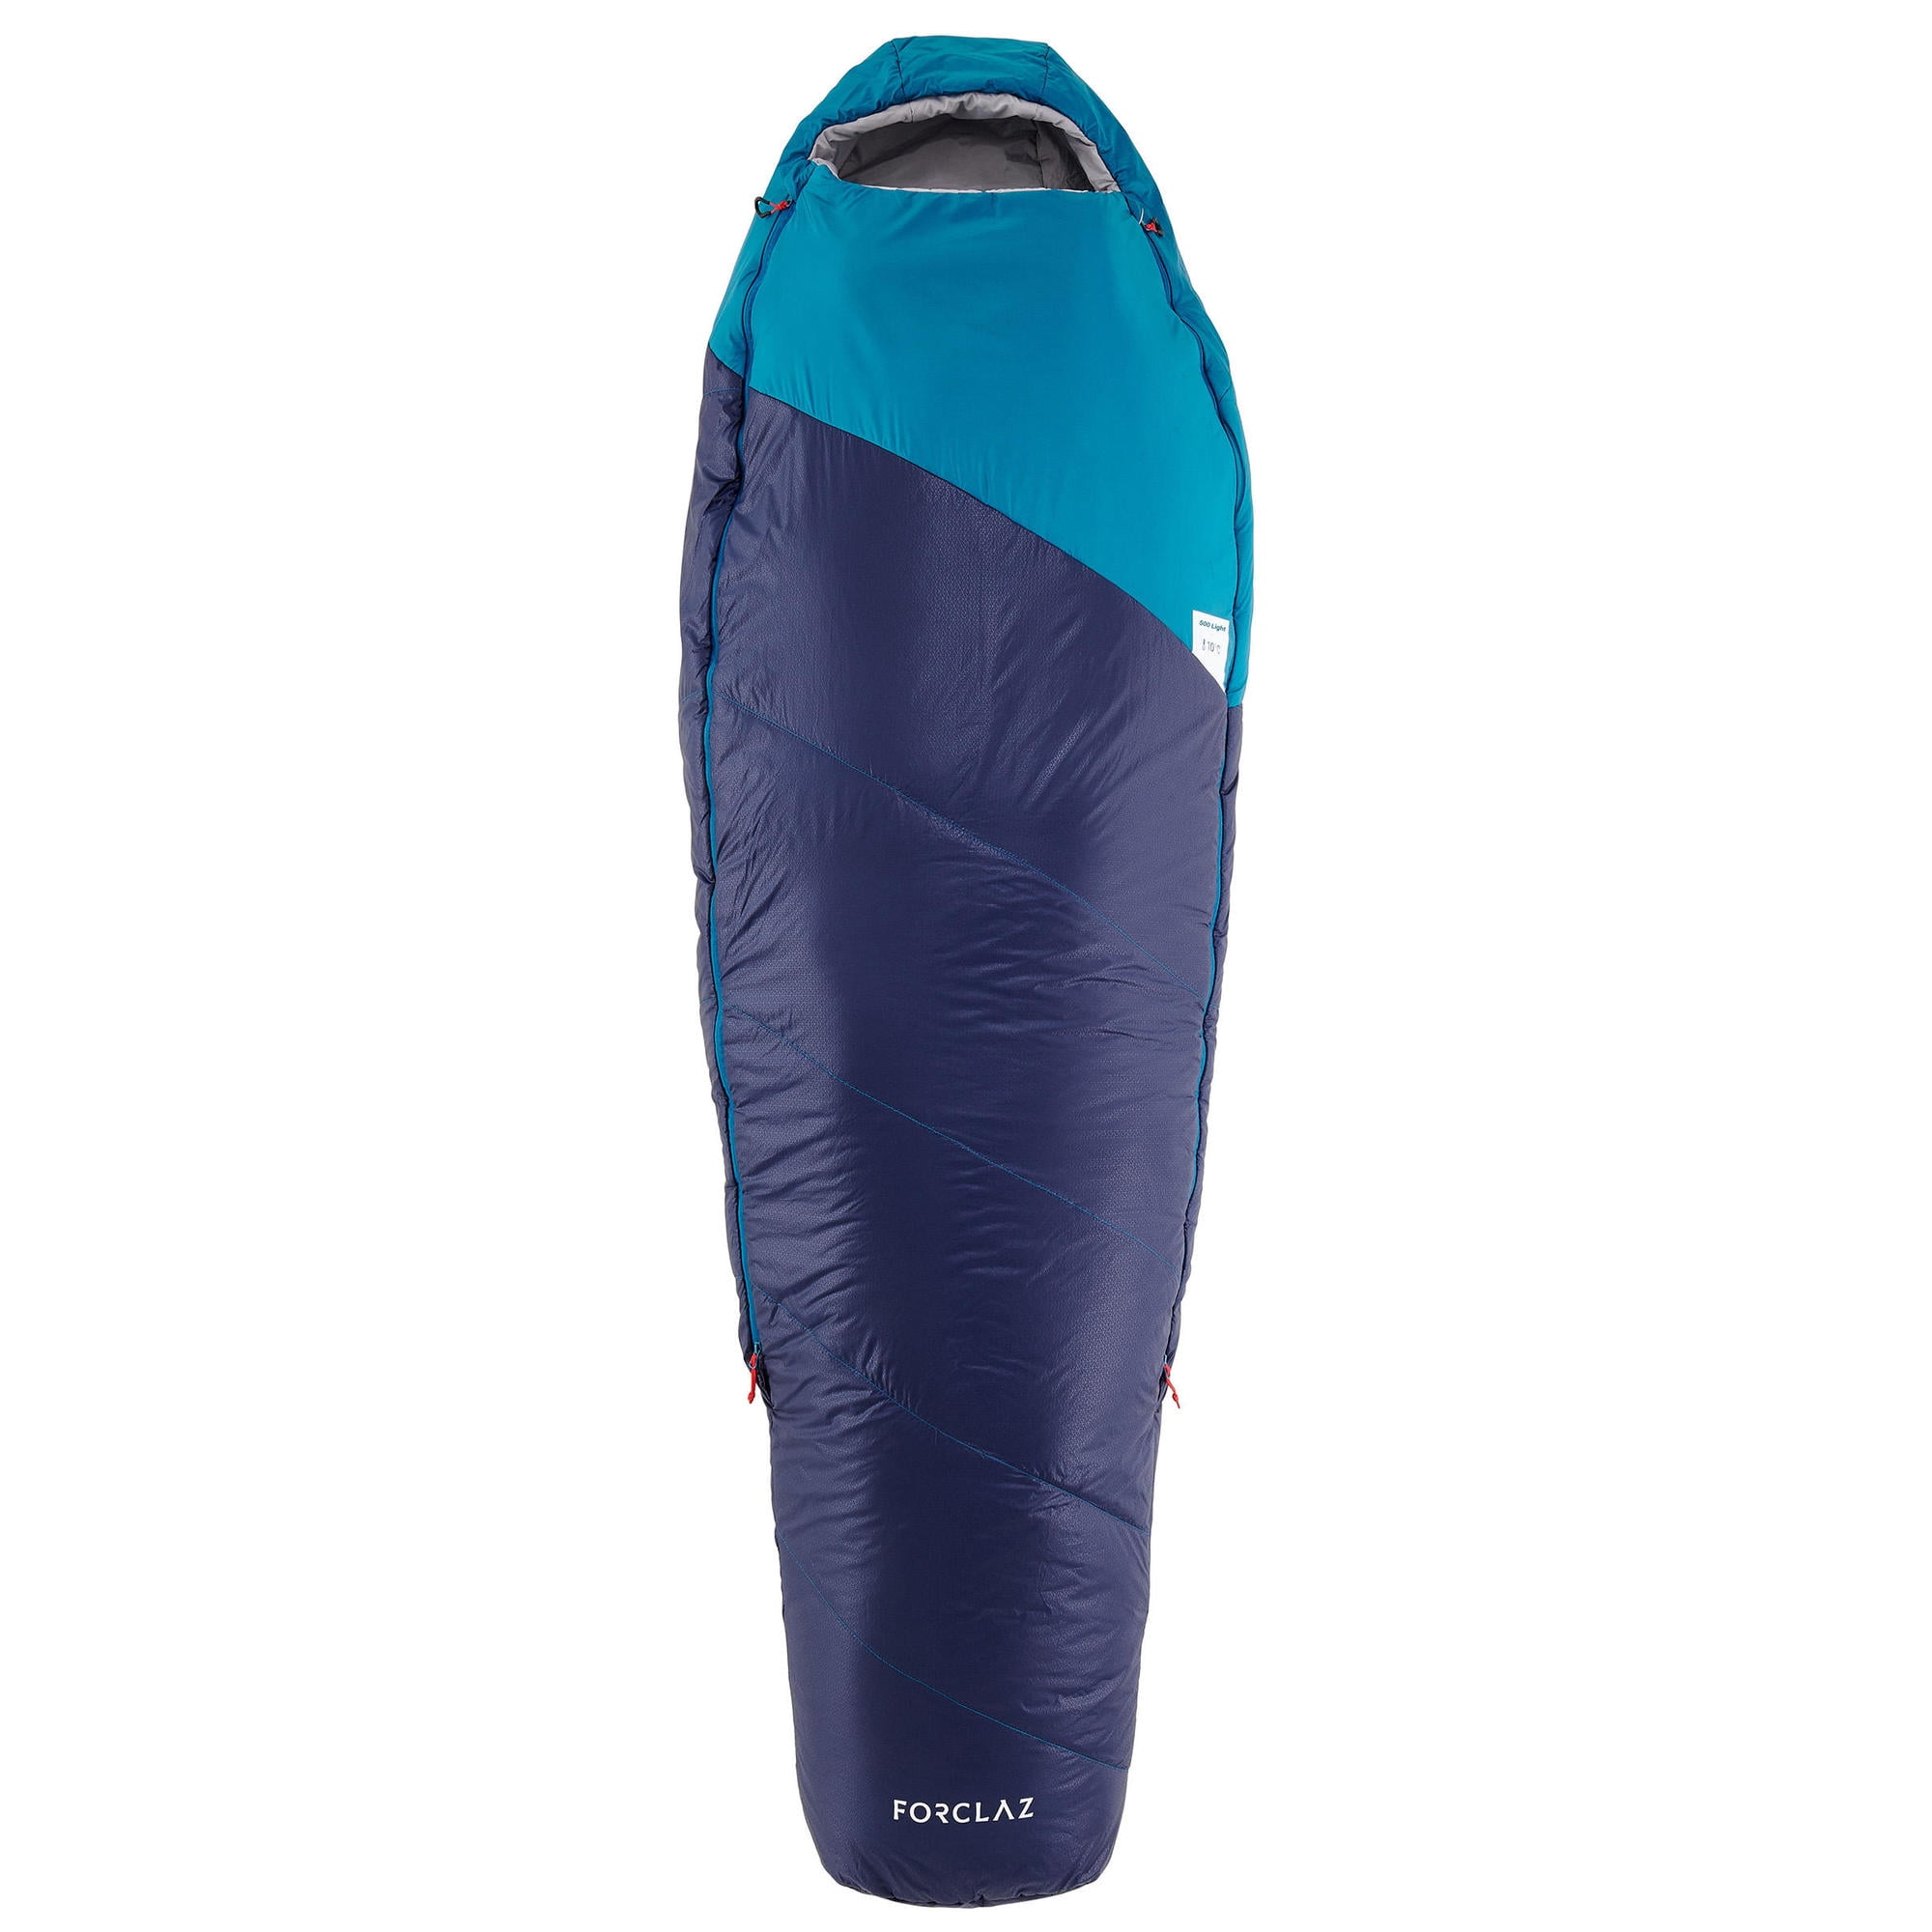 forclaz 500 light sleeping bag